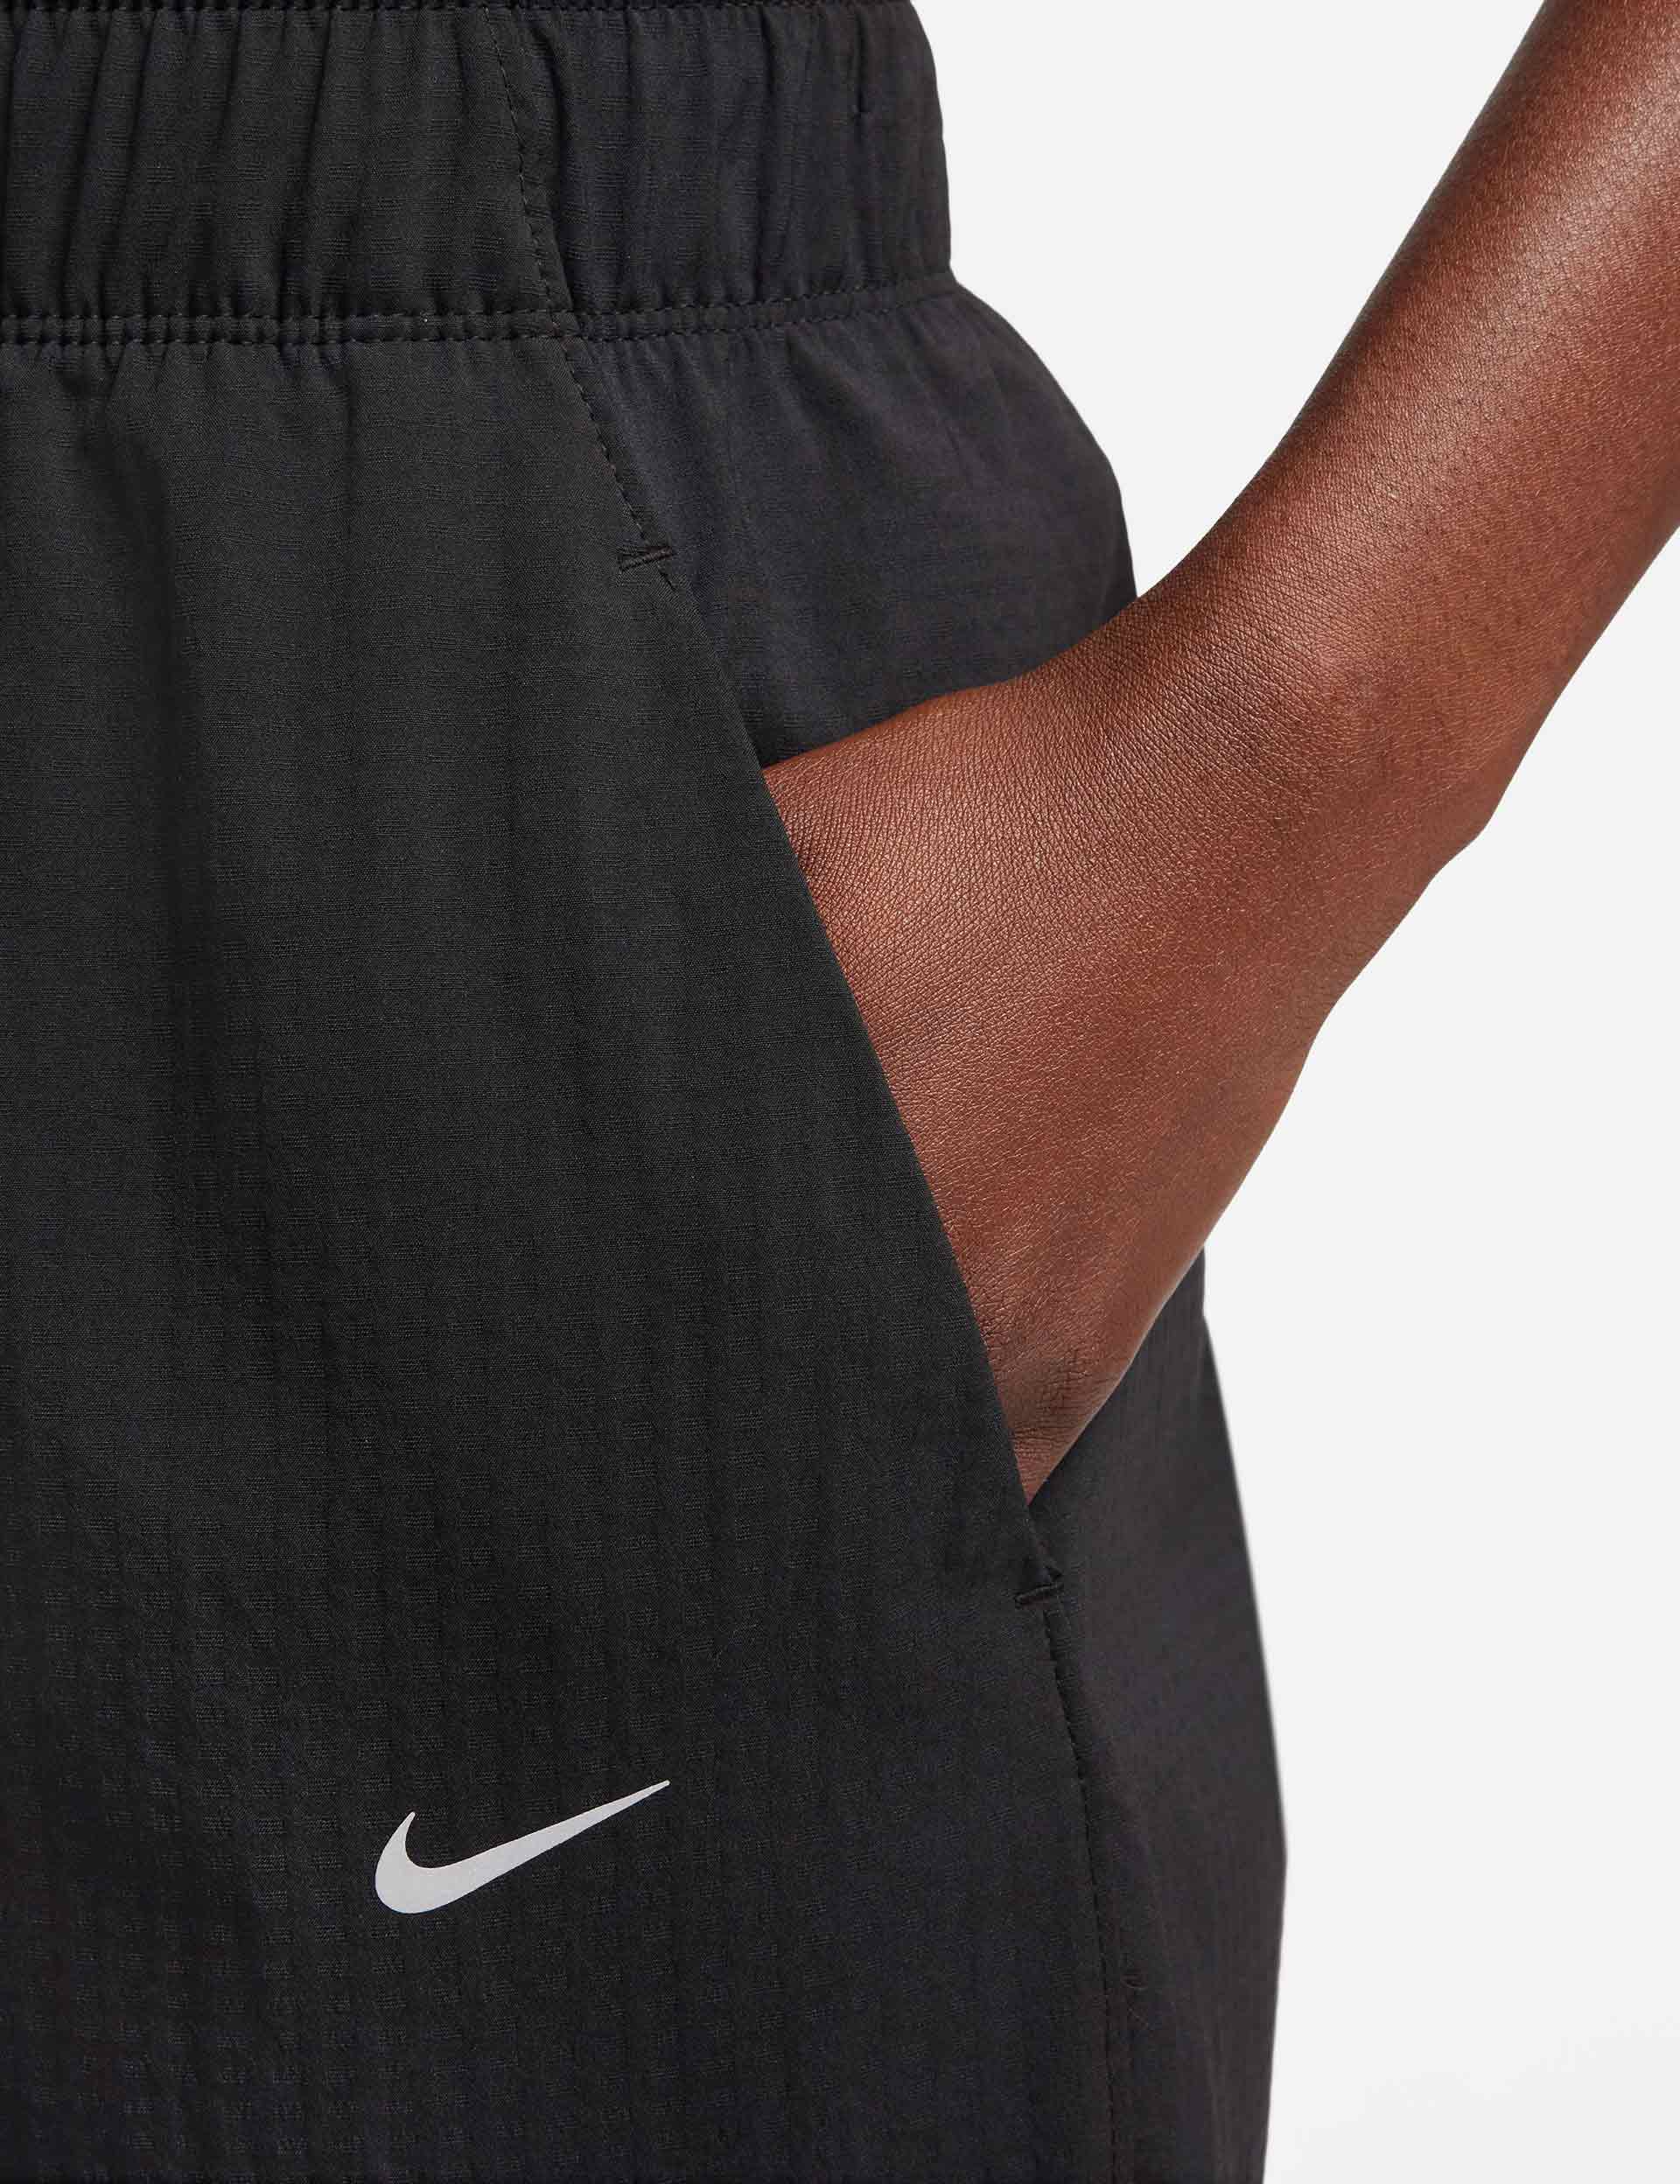 NWT - Nike Black Orange Dri-Fit Running Pants - M – CommunityWorx Thrift  Online